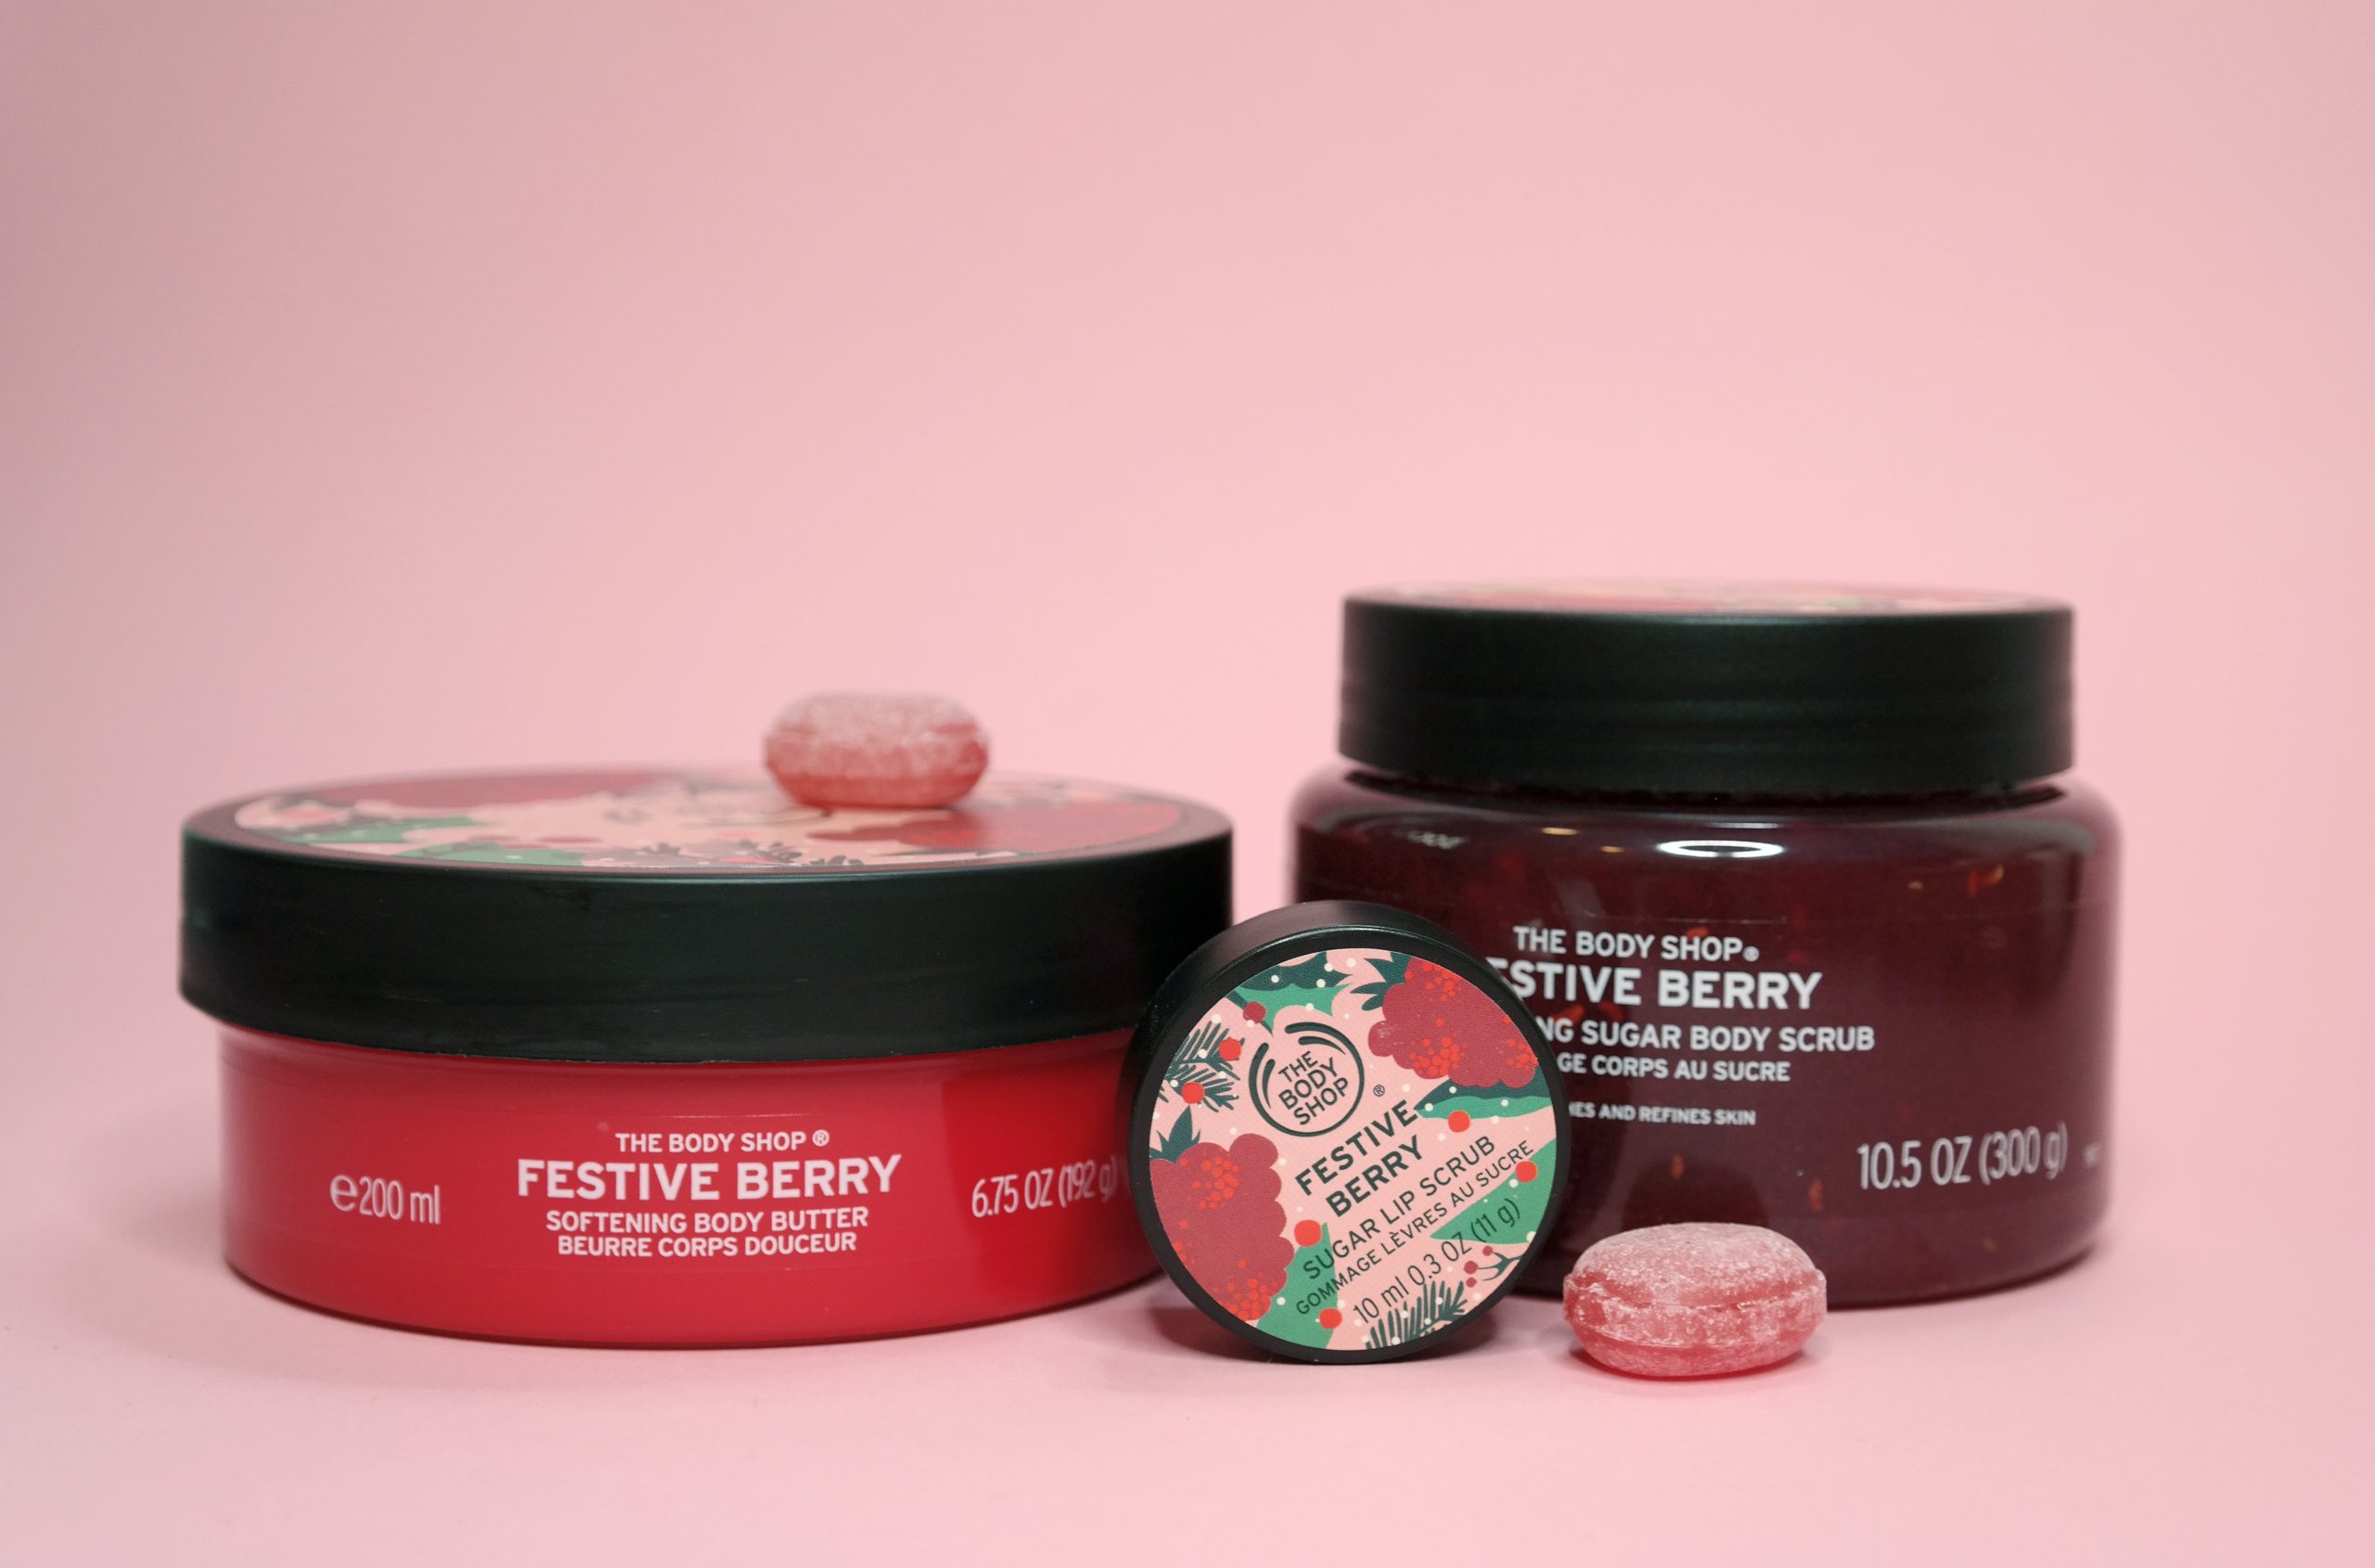 The Body Shop Festive Berry